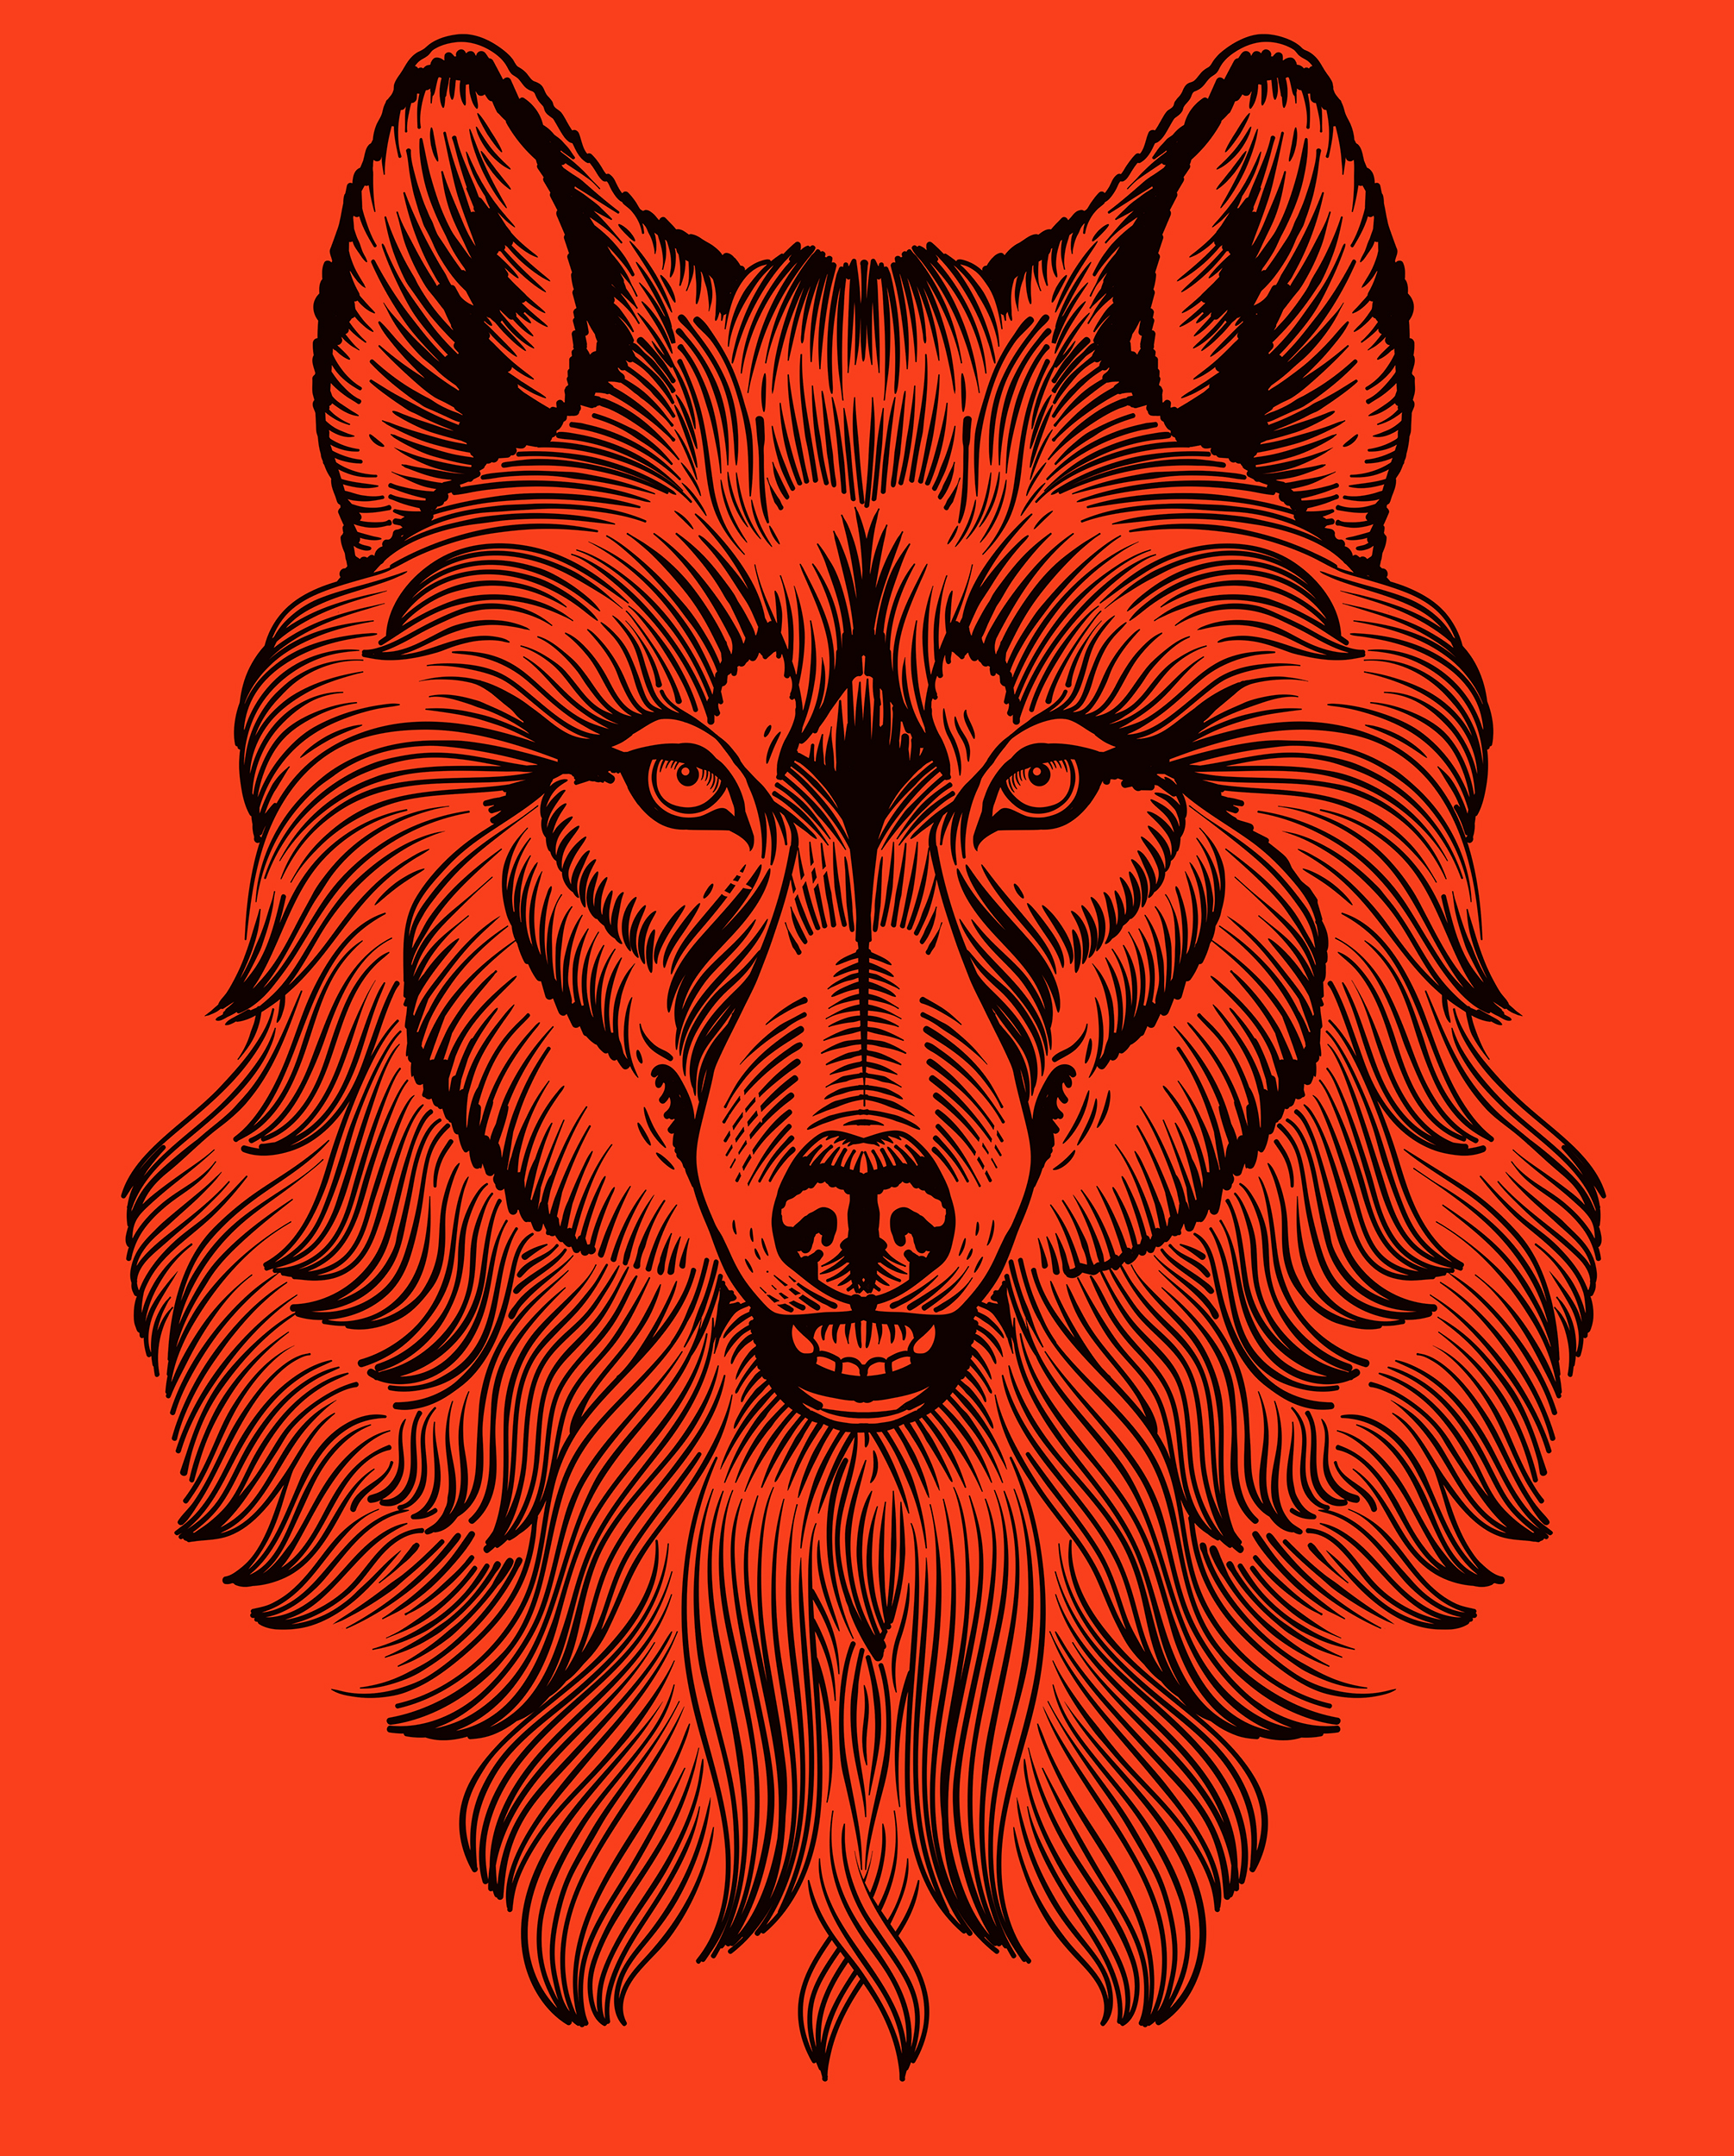 Wolf etching illustration for a label Vargtass Koskenkorva.